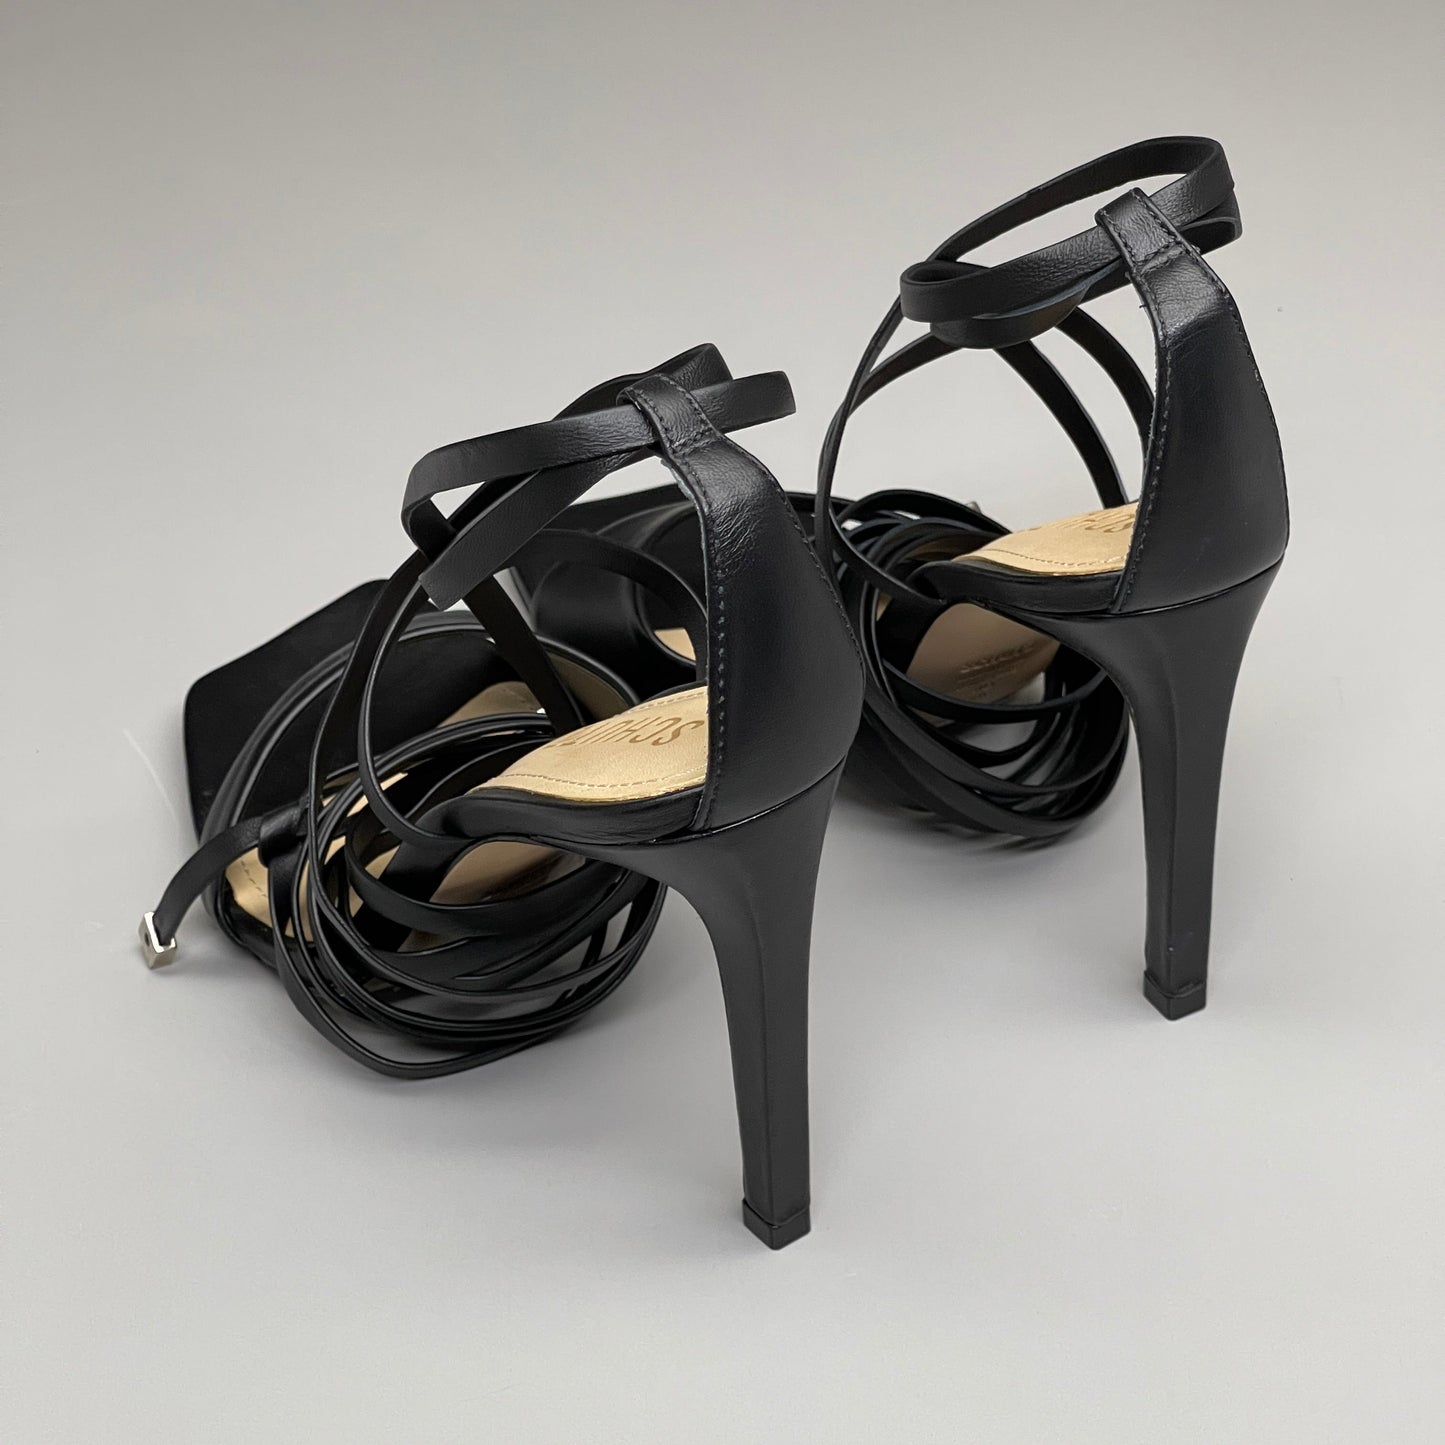 SCHUTZ Bryce Ankle Tie Women's Leather High Heel Strappy Sandal Black Sz 6.5B (New)